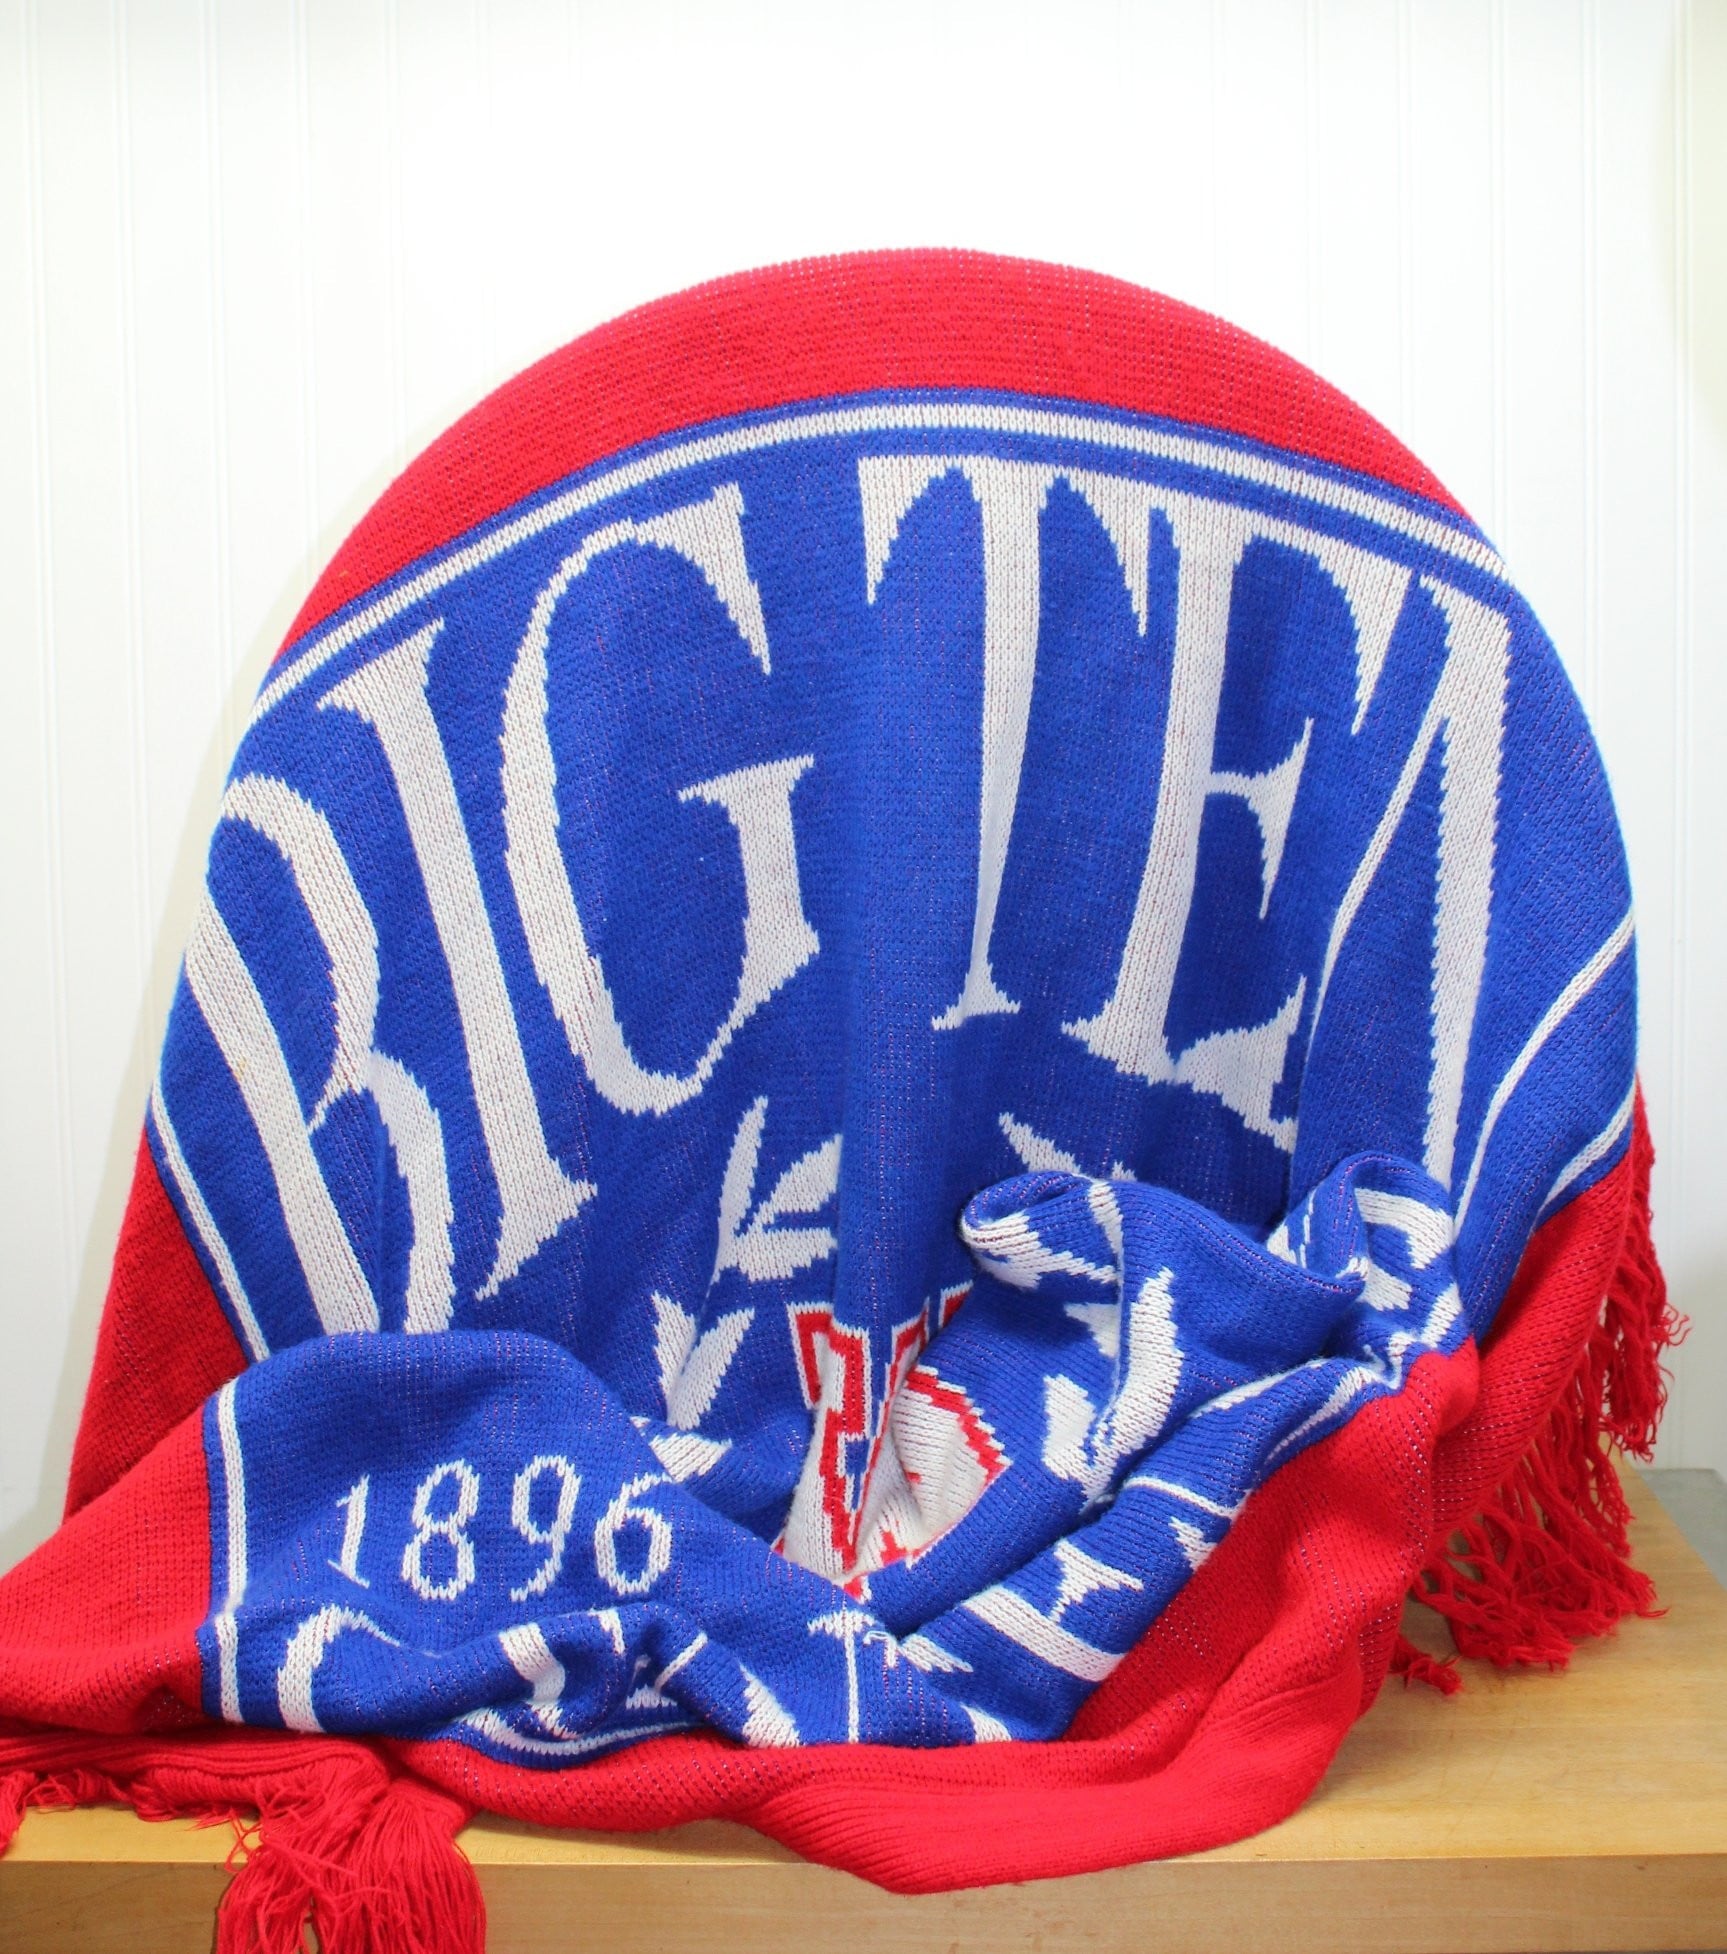 Big Ten Centennial Collectible Throw Blanket -  1896 -- 1996 - Wisconsin vintage 1996